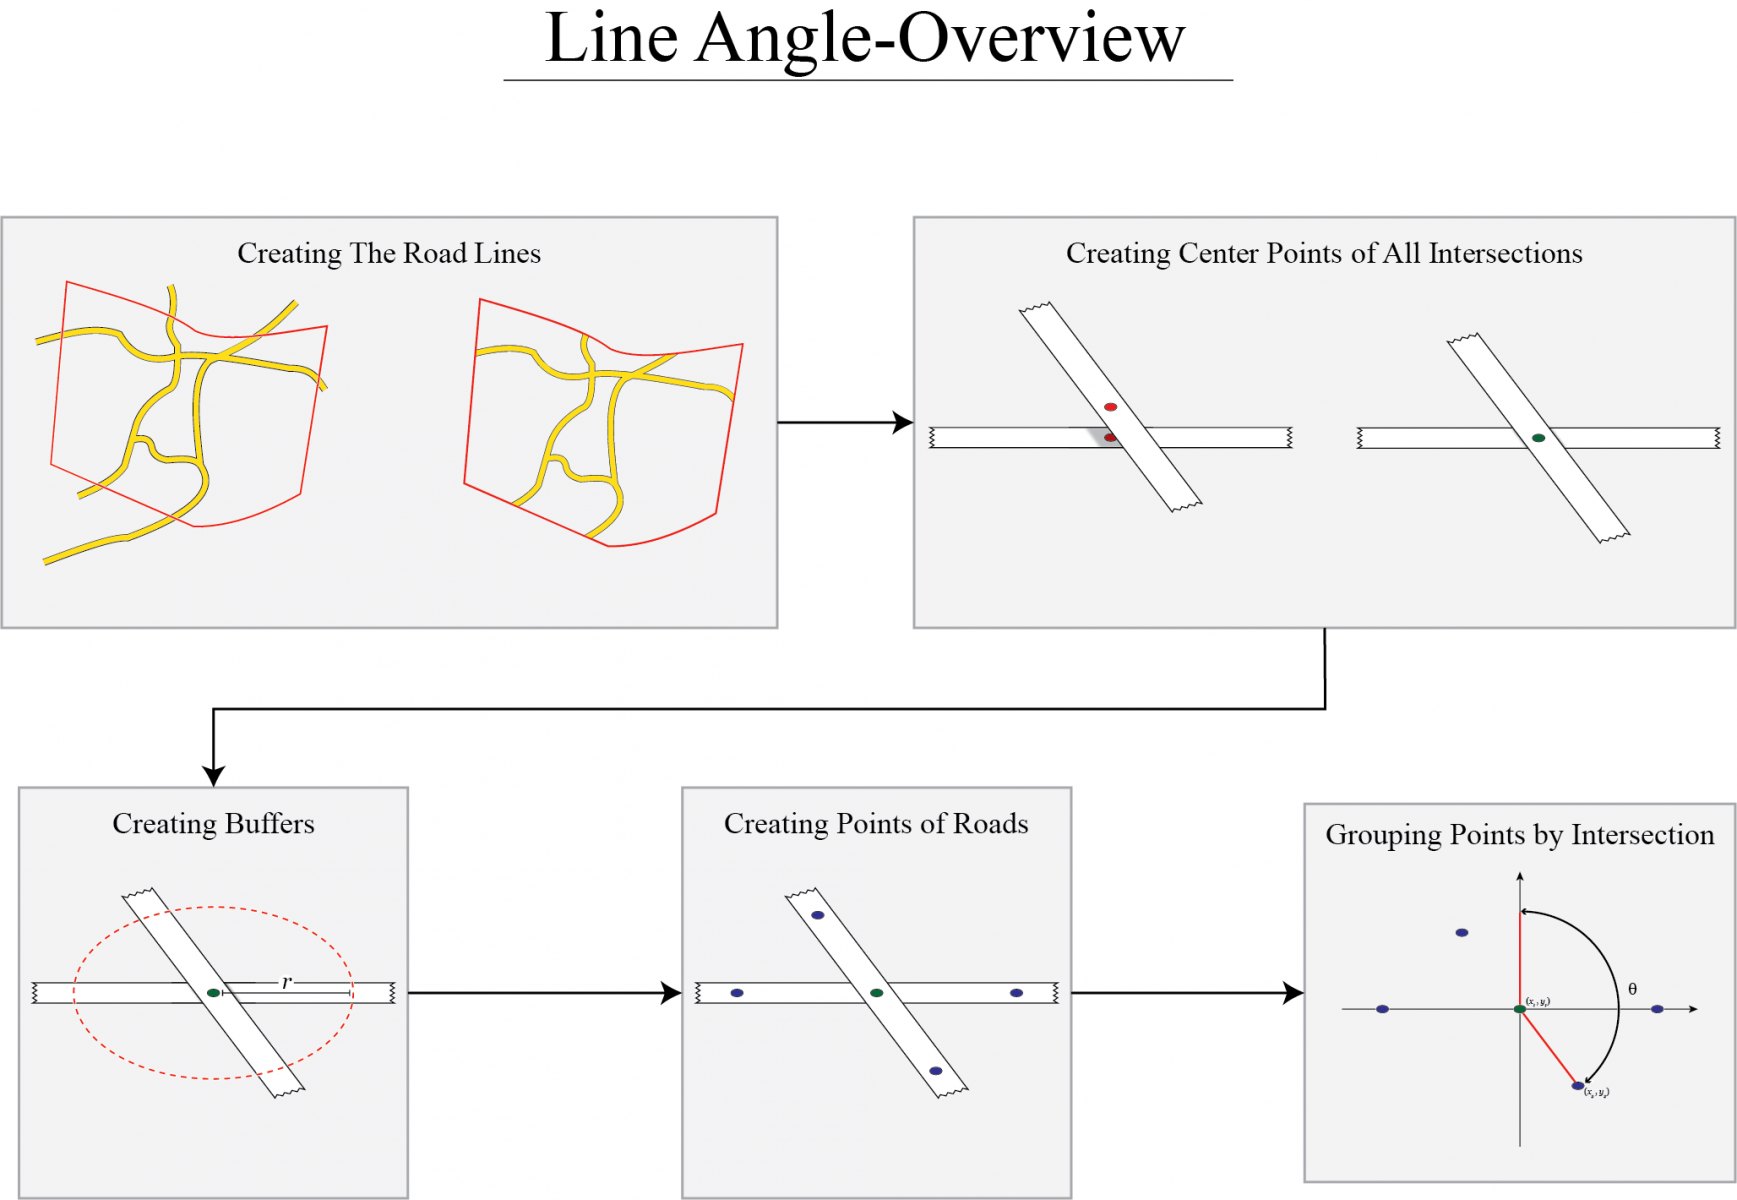 Linge-Angle-Overview